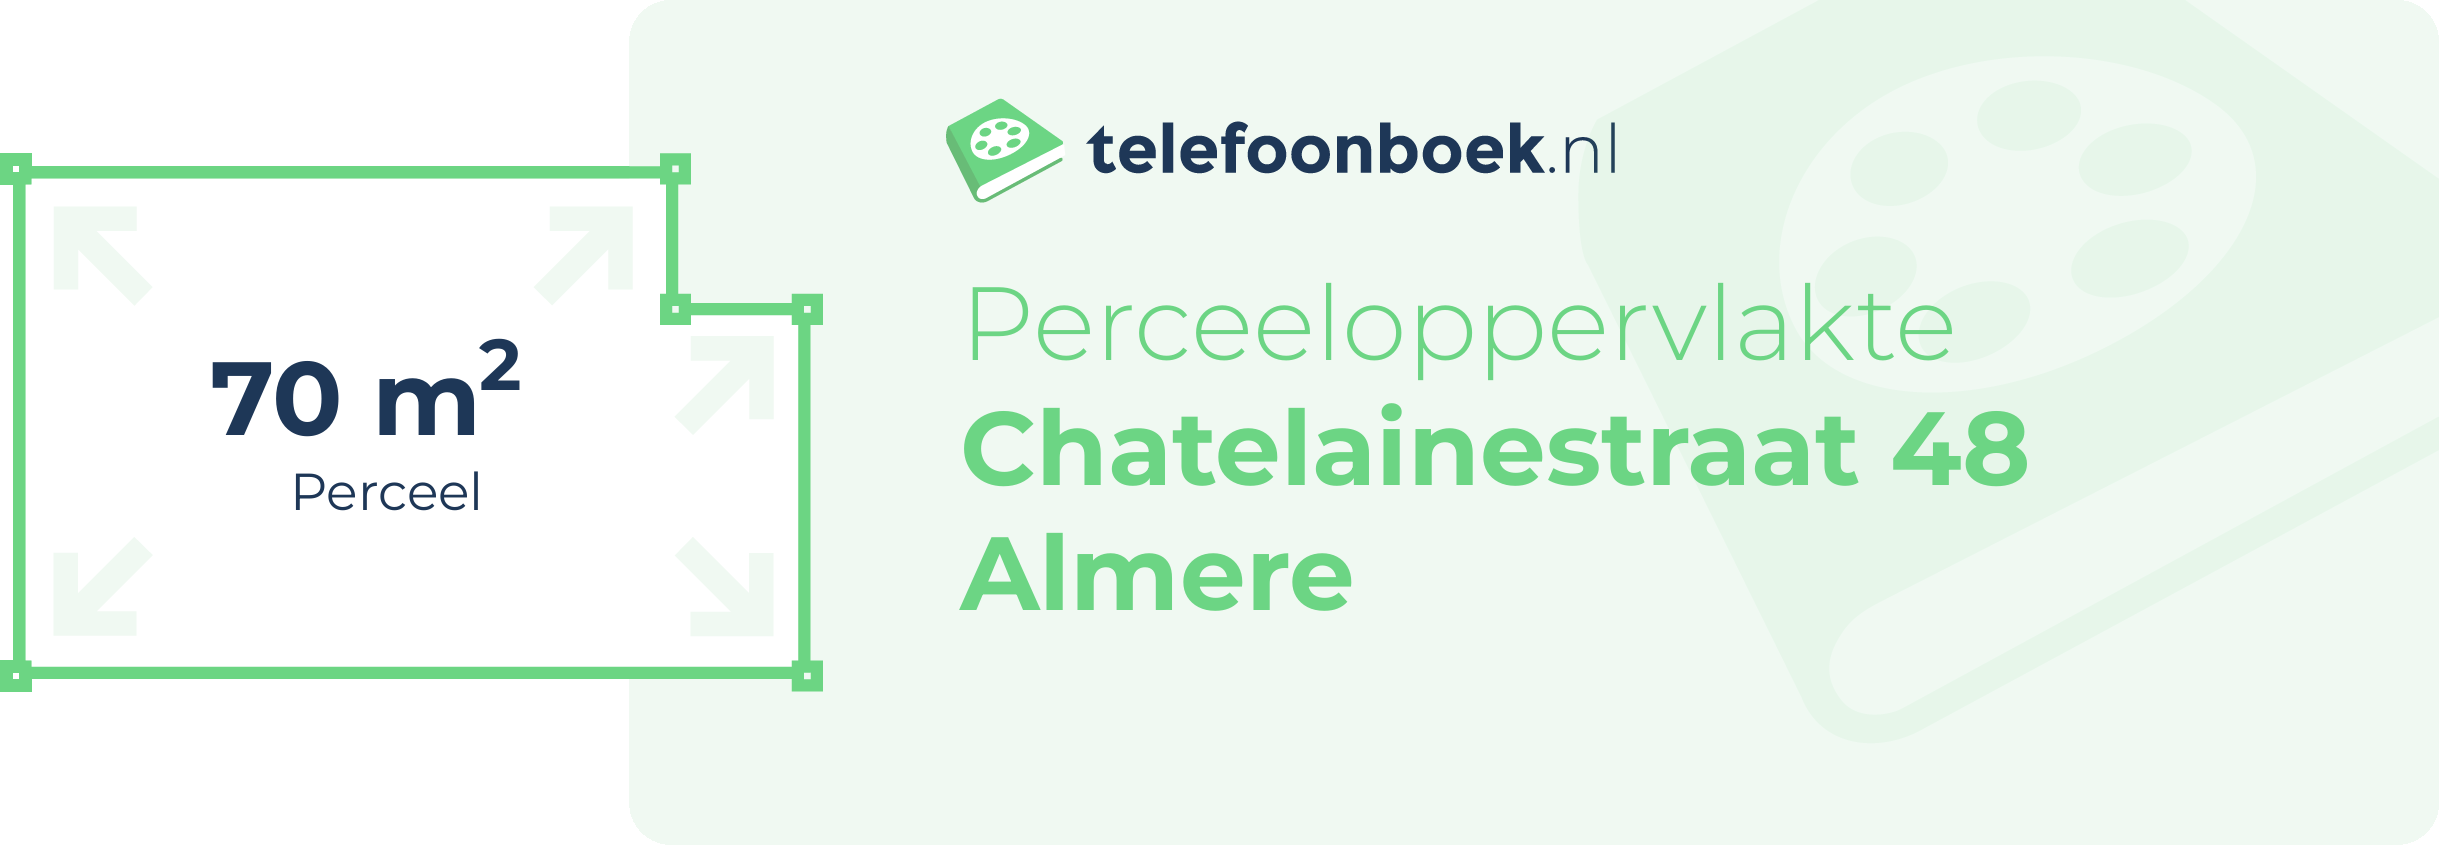 Perceeloppervlakte Chatelainestraat 48 Almere